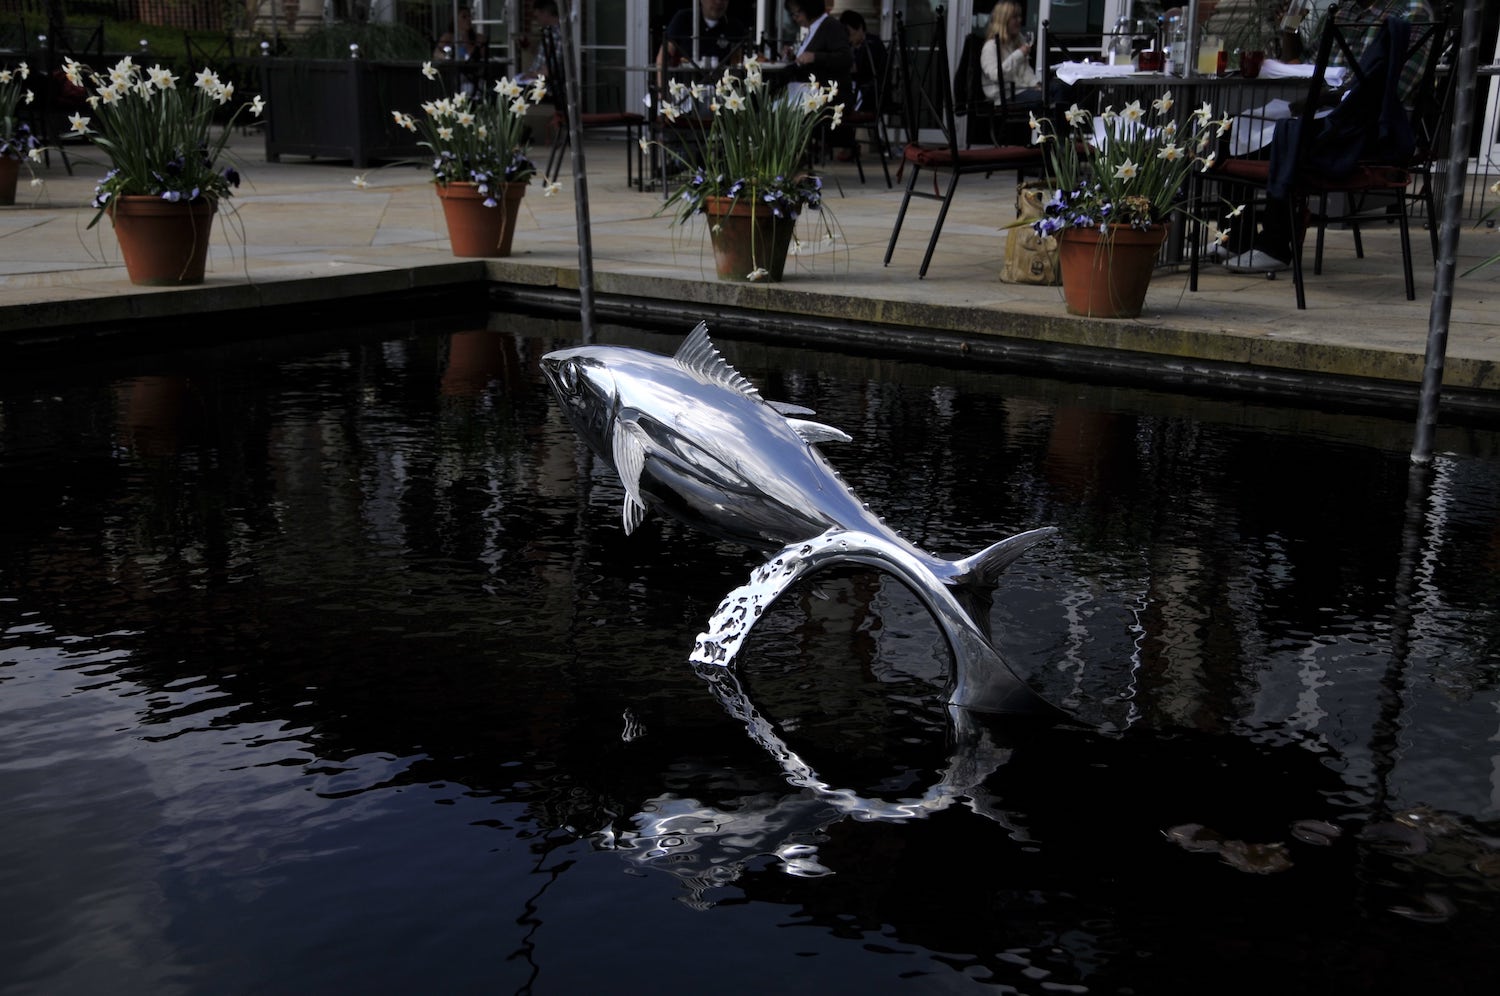 Tuna sculpture over water